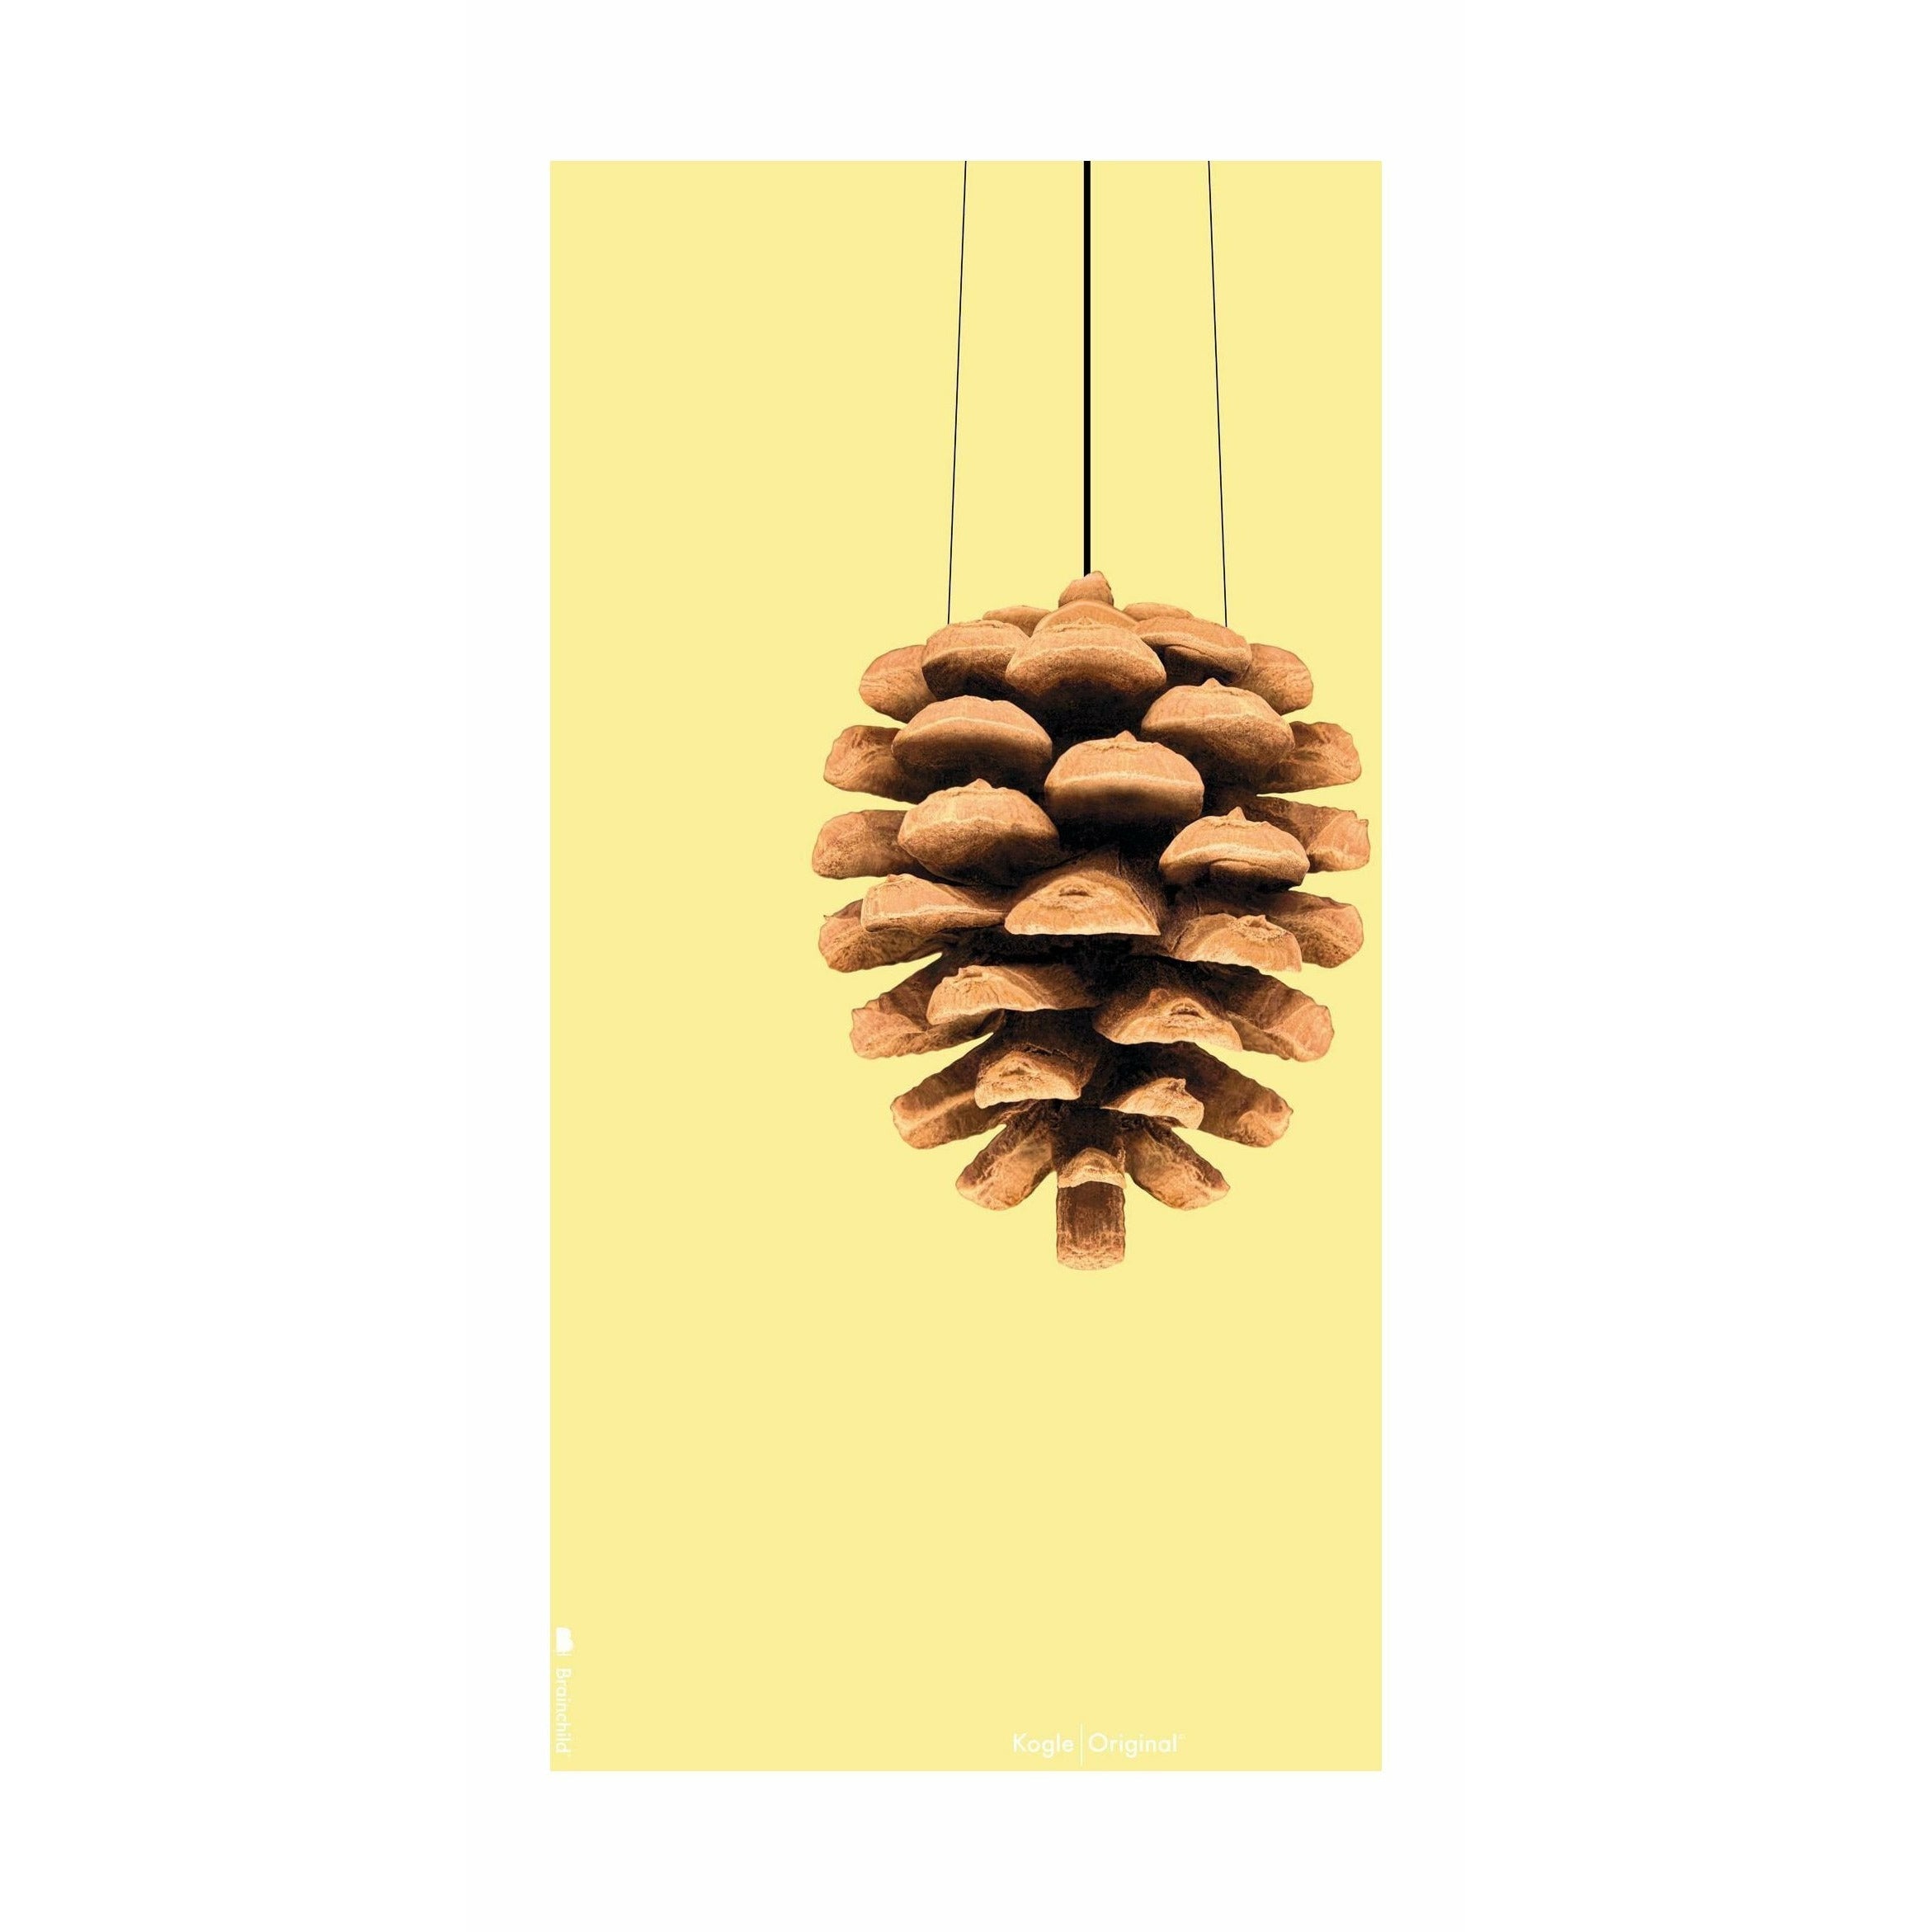 brainchild Pine Cone Classic Poster uden ramme 70 x100 cm, gul baggrund